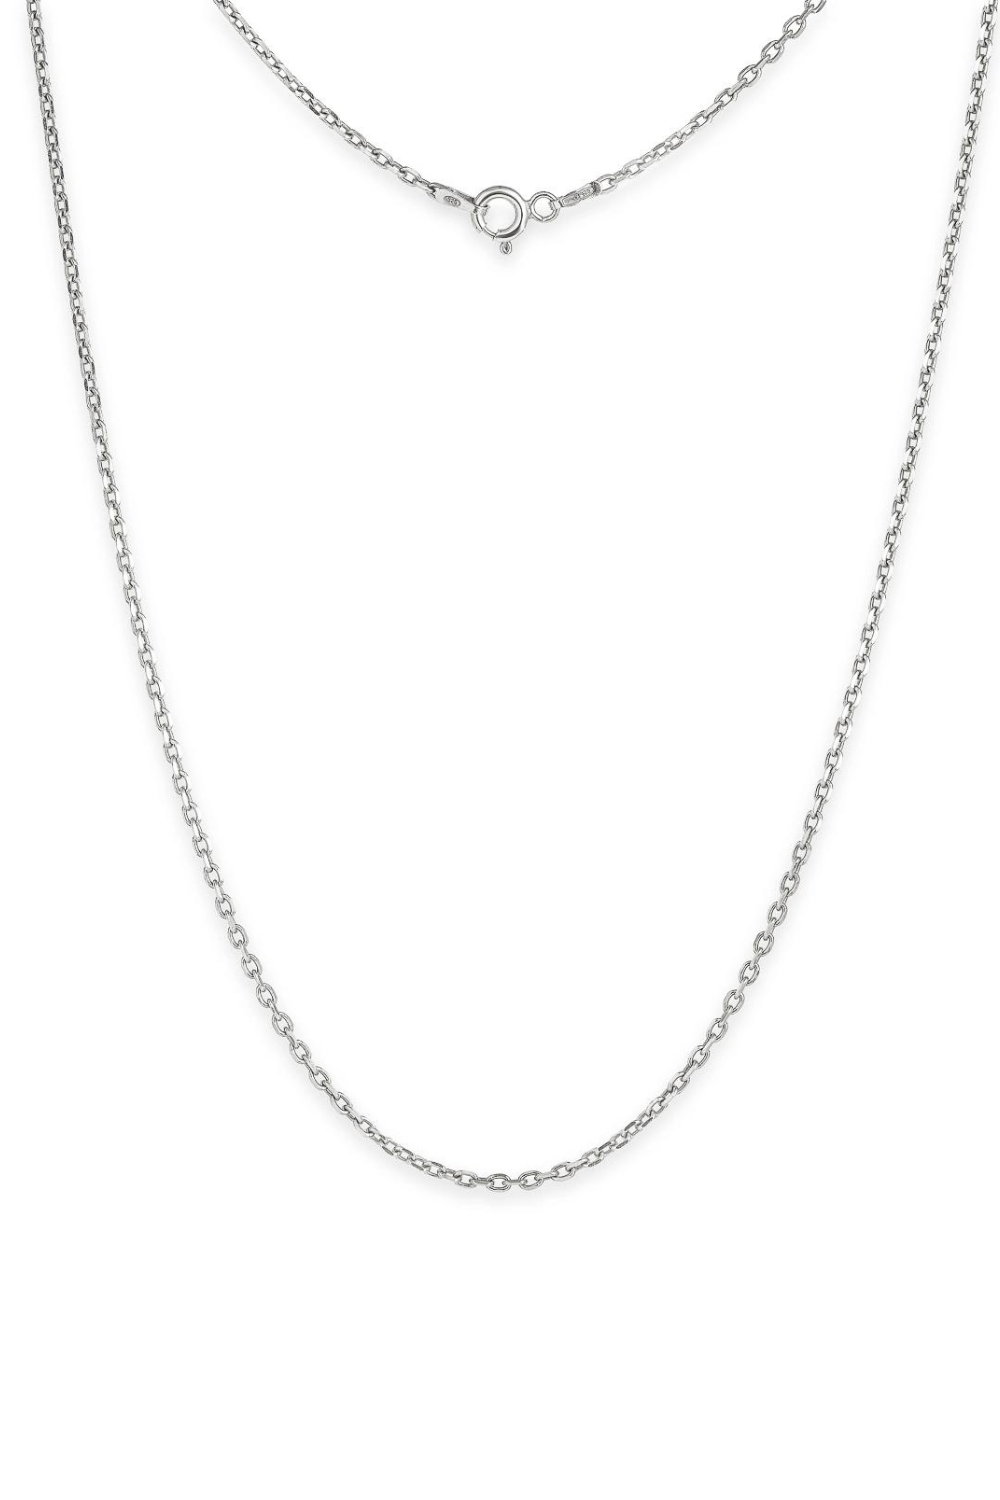 Barokní perla+Stříbrný pletený řetízek Anker 55 cm (SILVERAMO), Per01